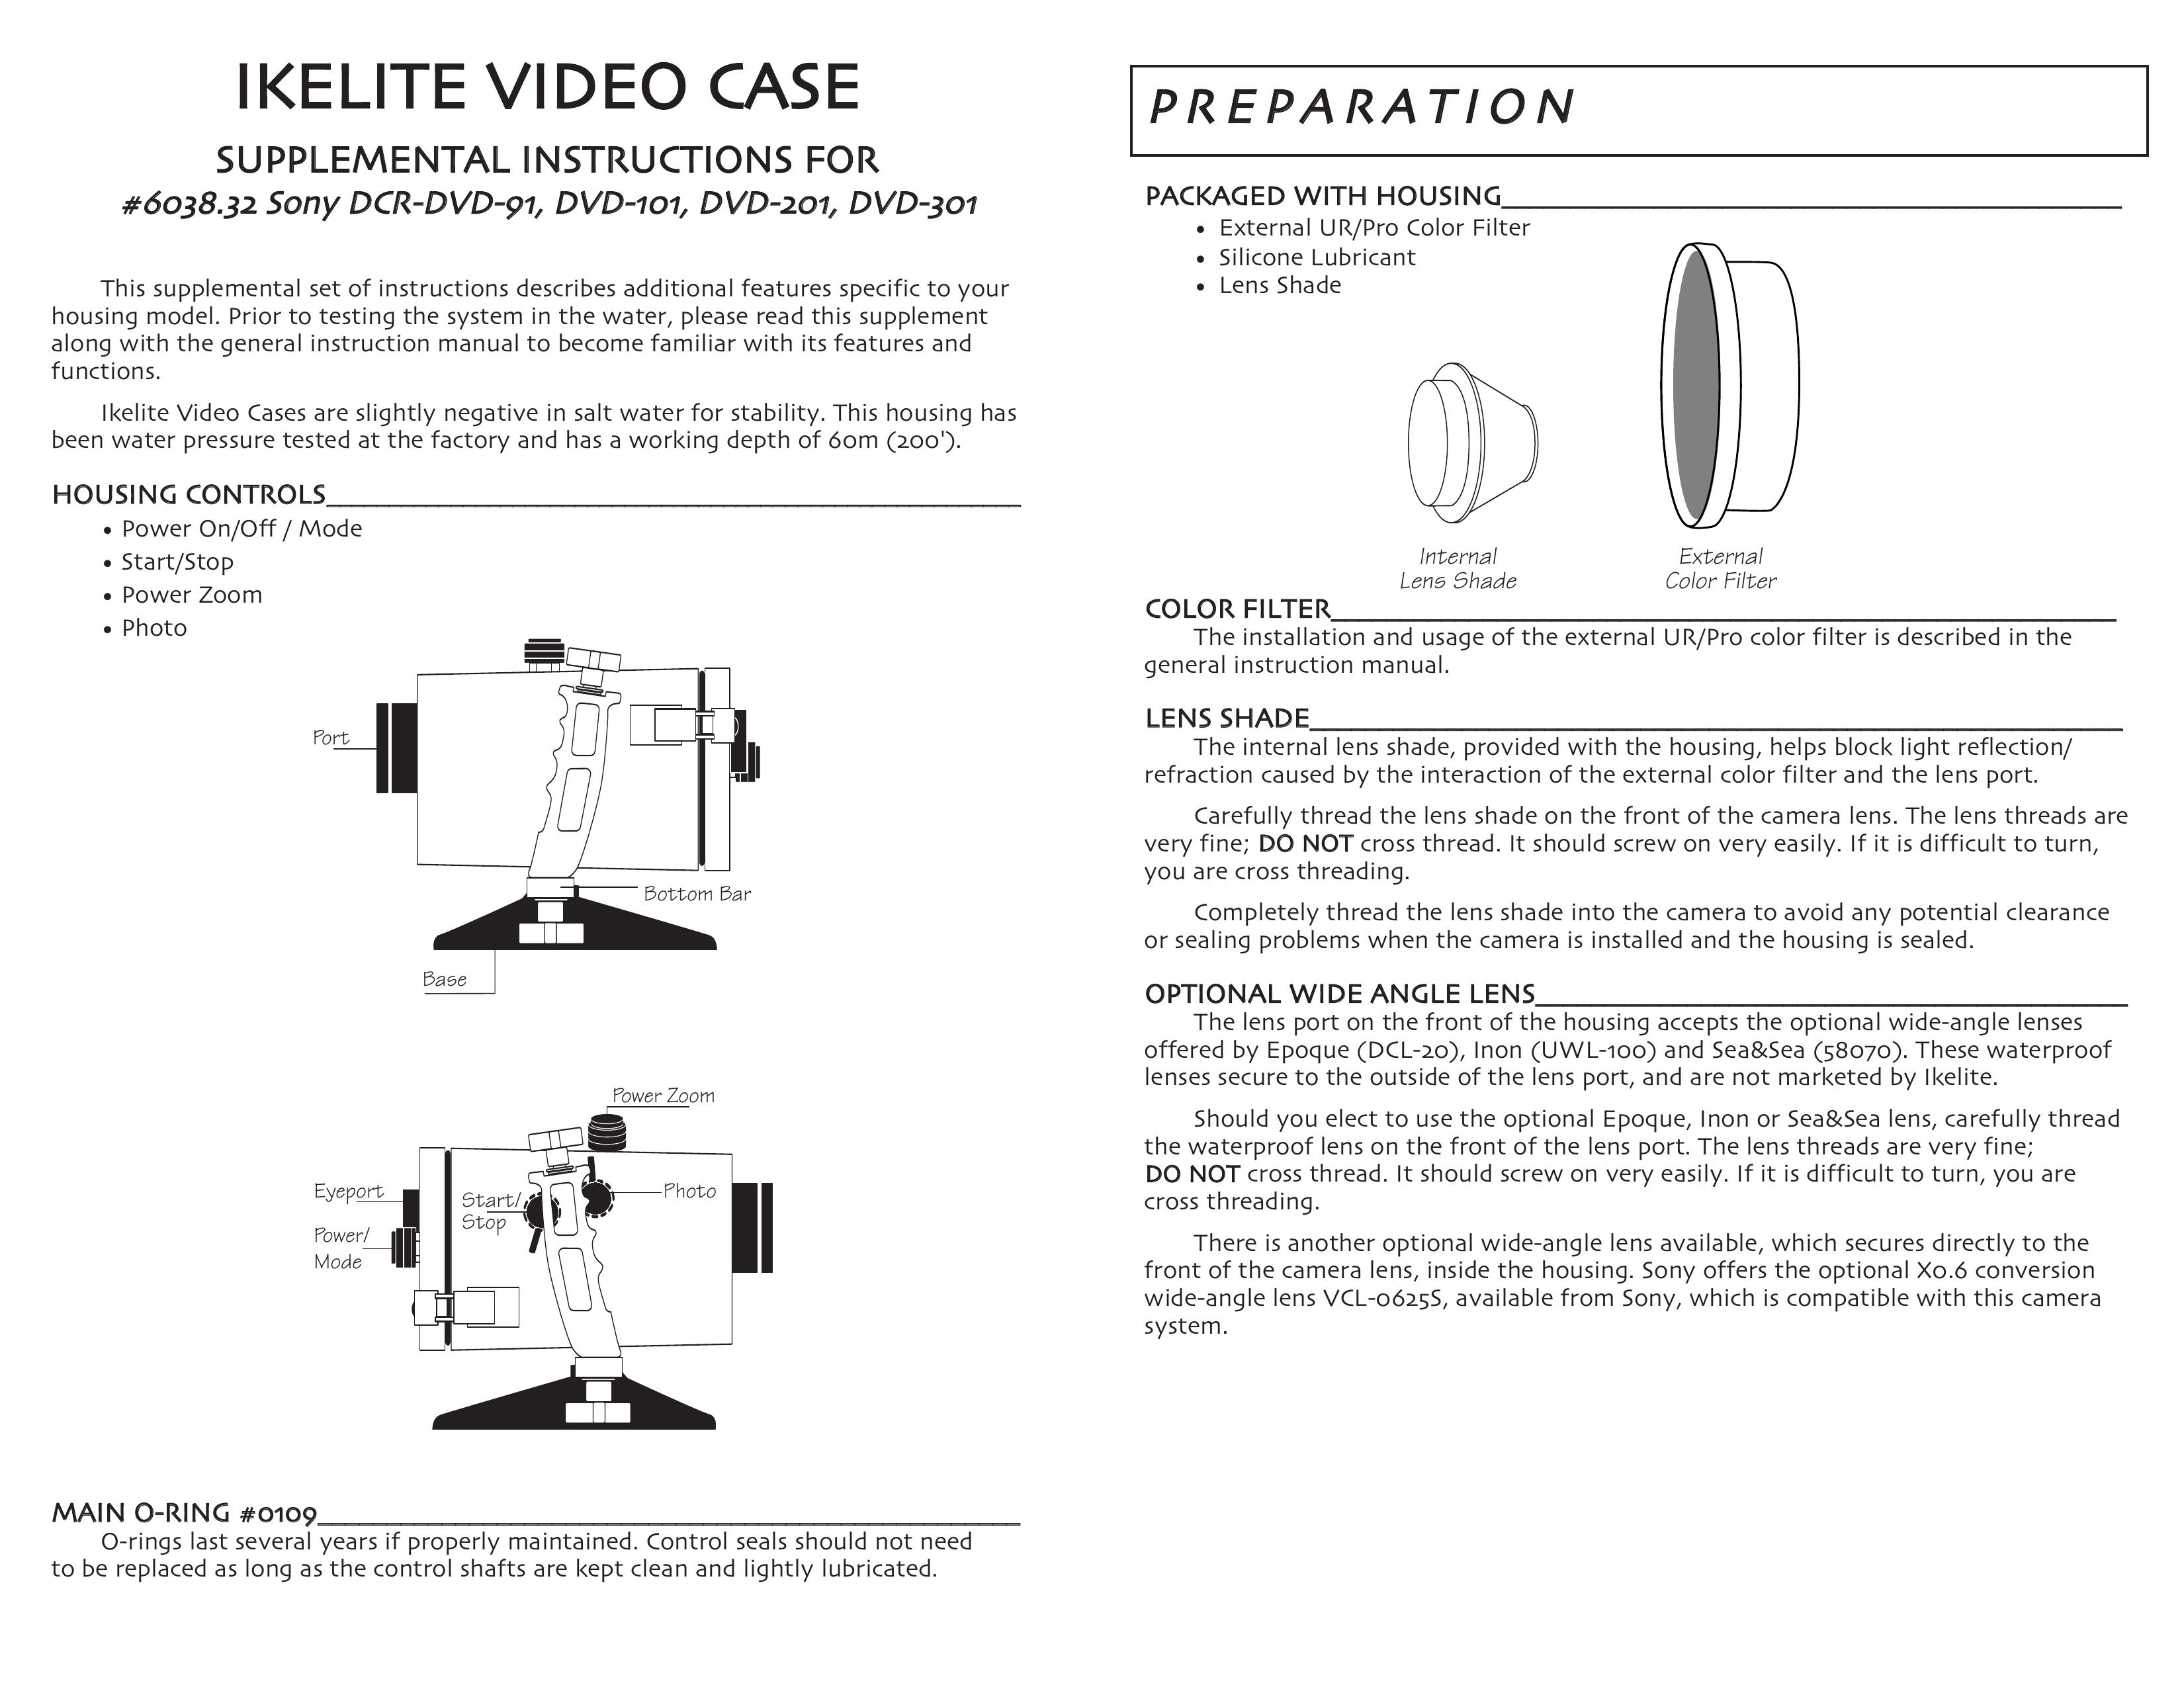 Ikelite DCR-DVD-91 Camera Accessories User Manual